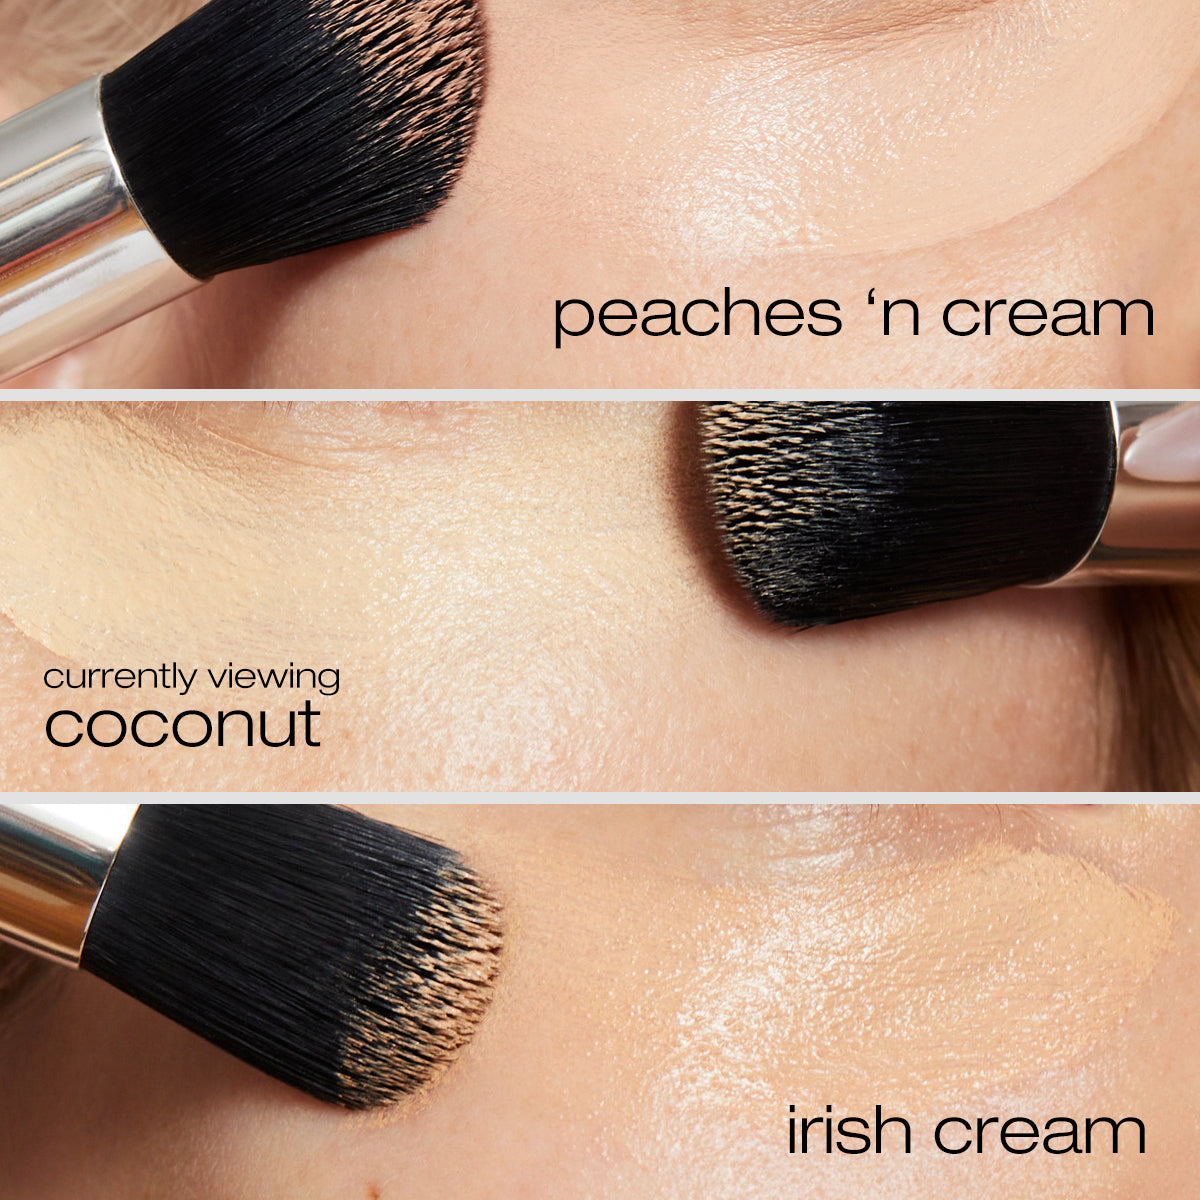 Custard, Peaches 'n cream, and Irish cream concealer refill covering undereyes